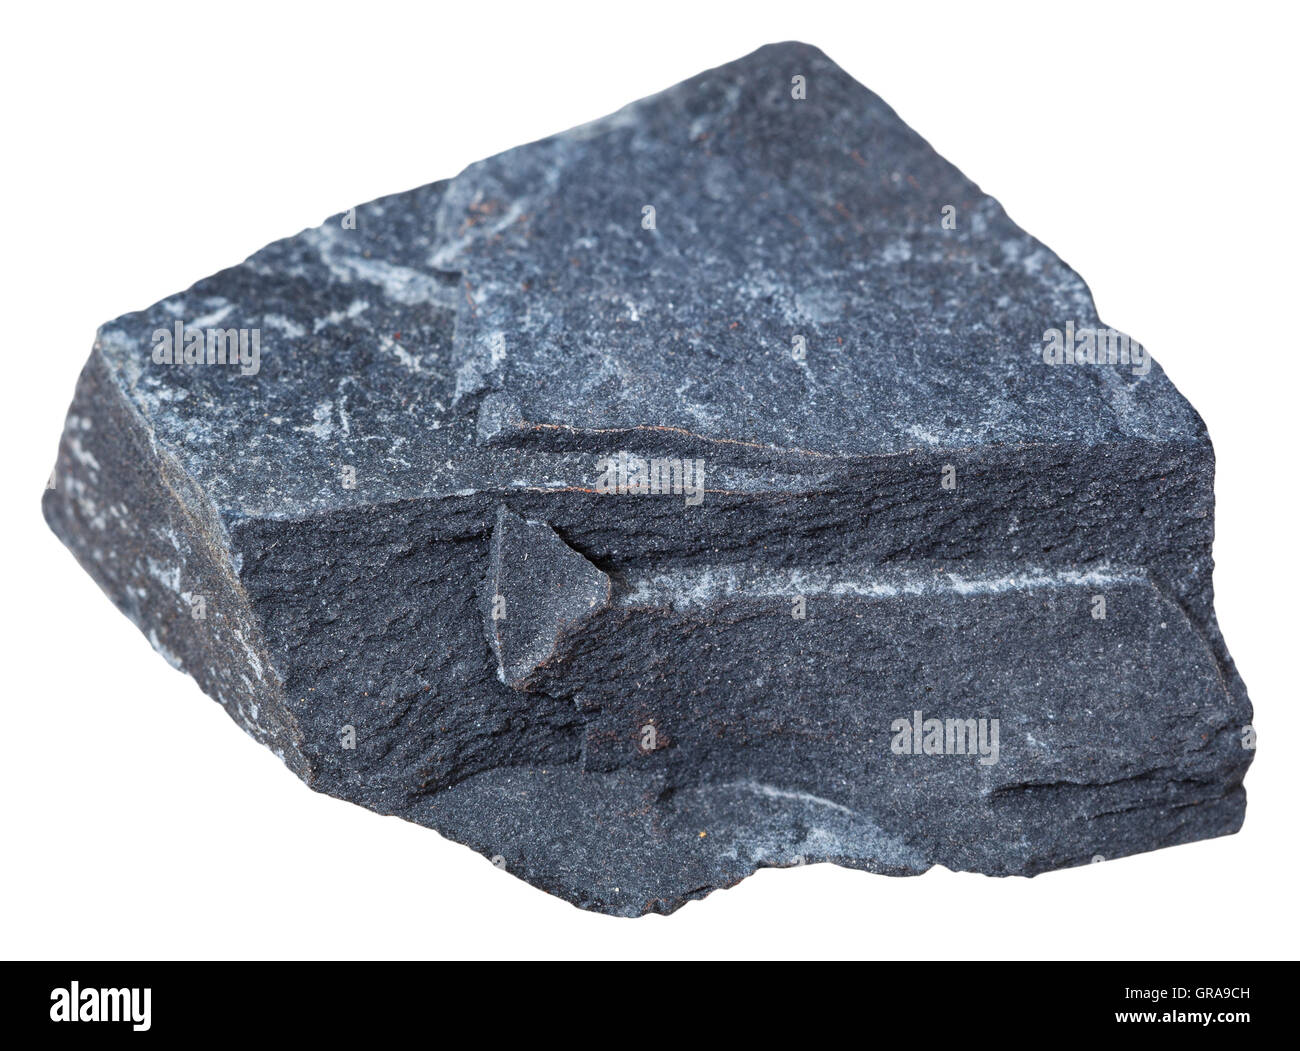 macro shooting of sedimentary rock specimens - Argillite (mudstone) mineral isolated on white background Stock Photo